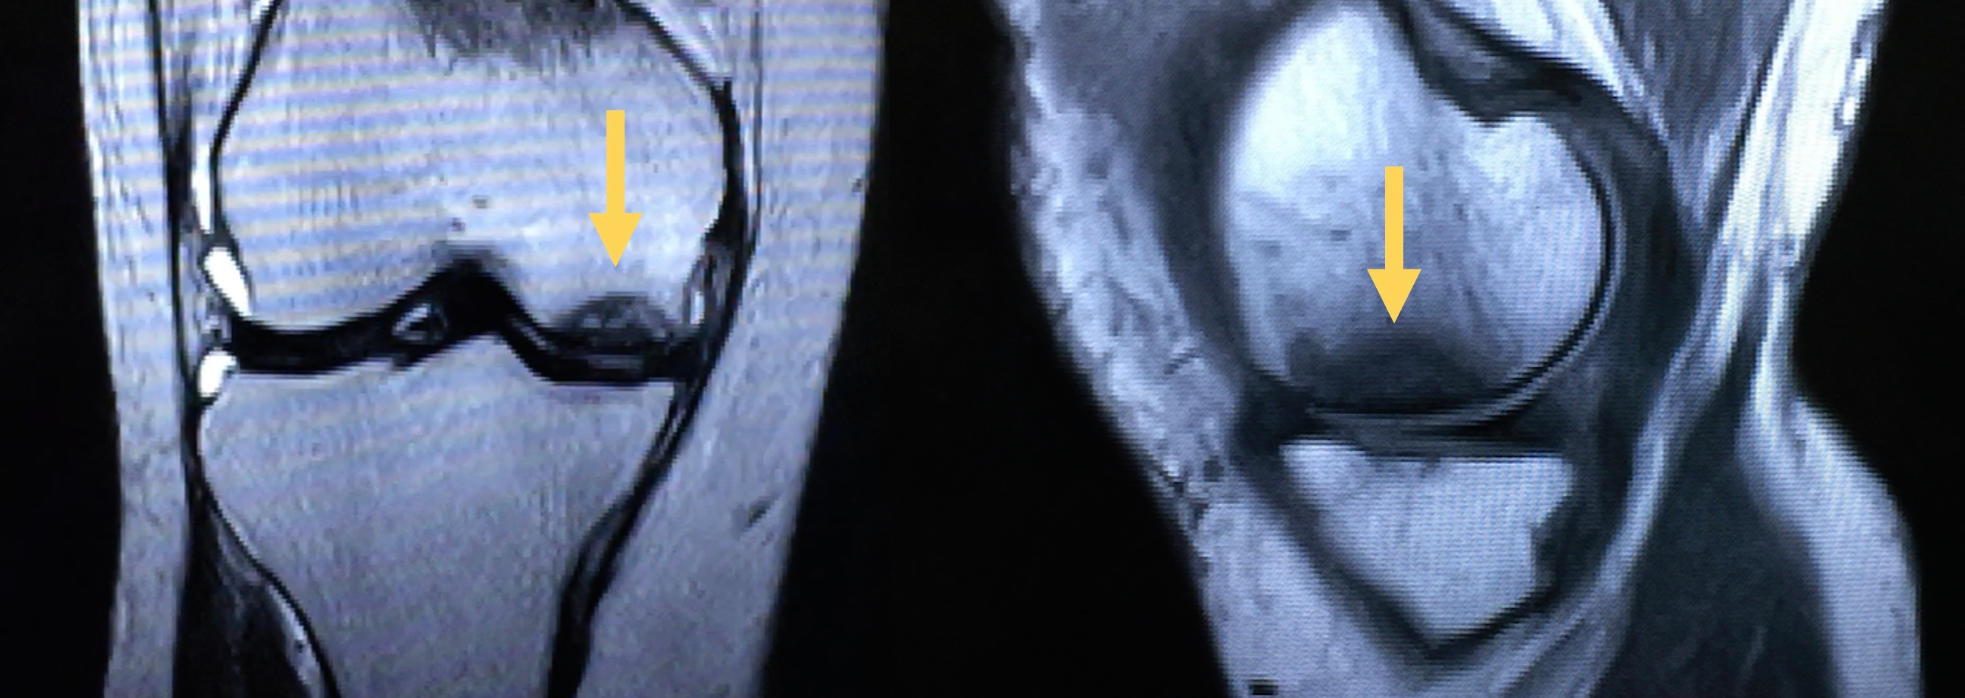 MRI of knee osteonecrosis